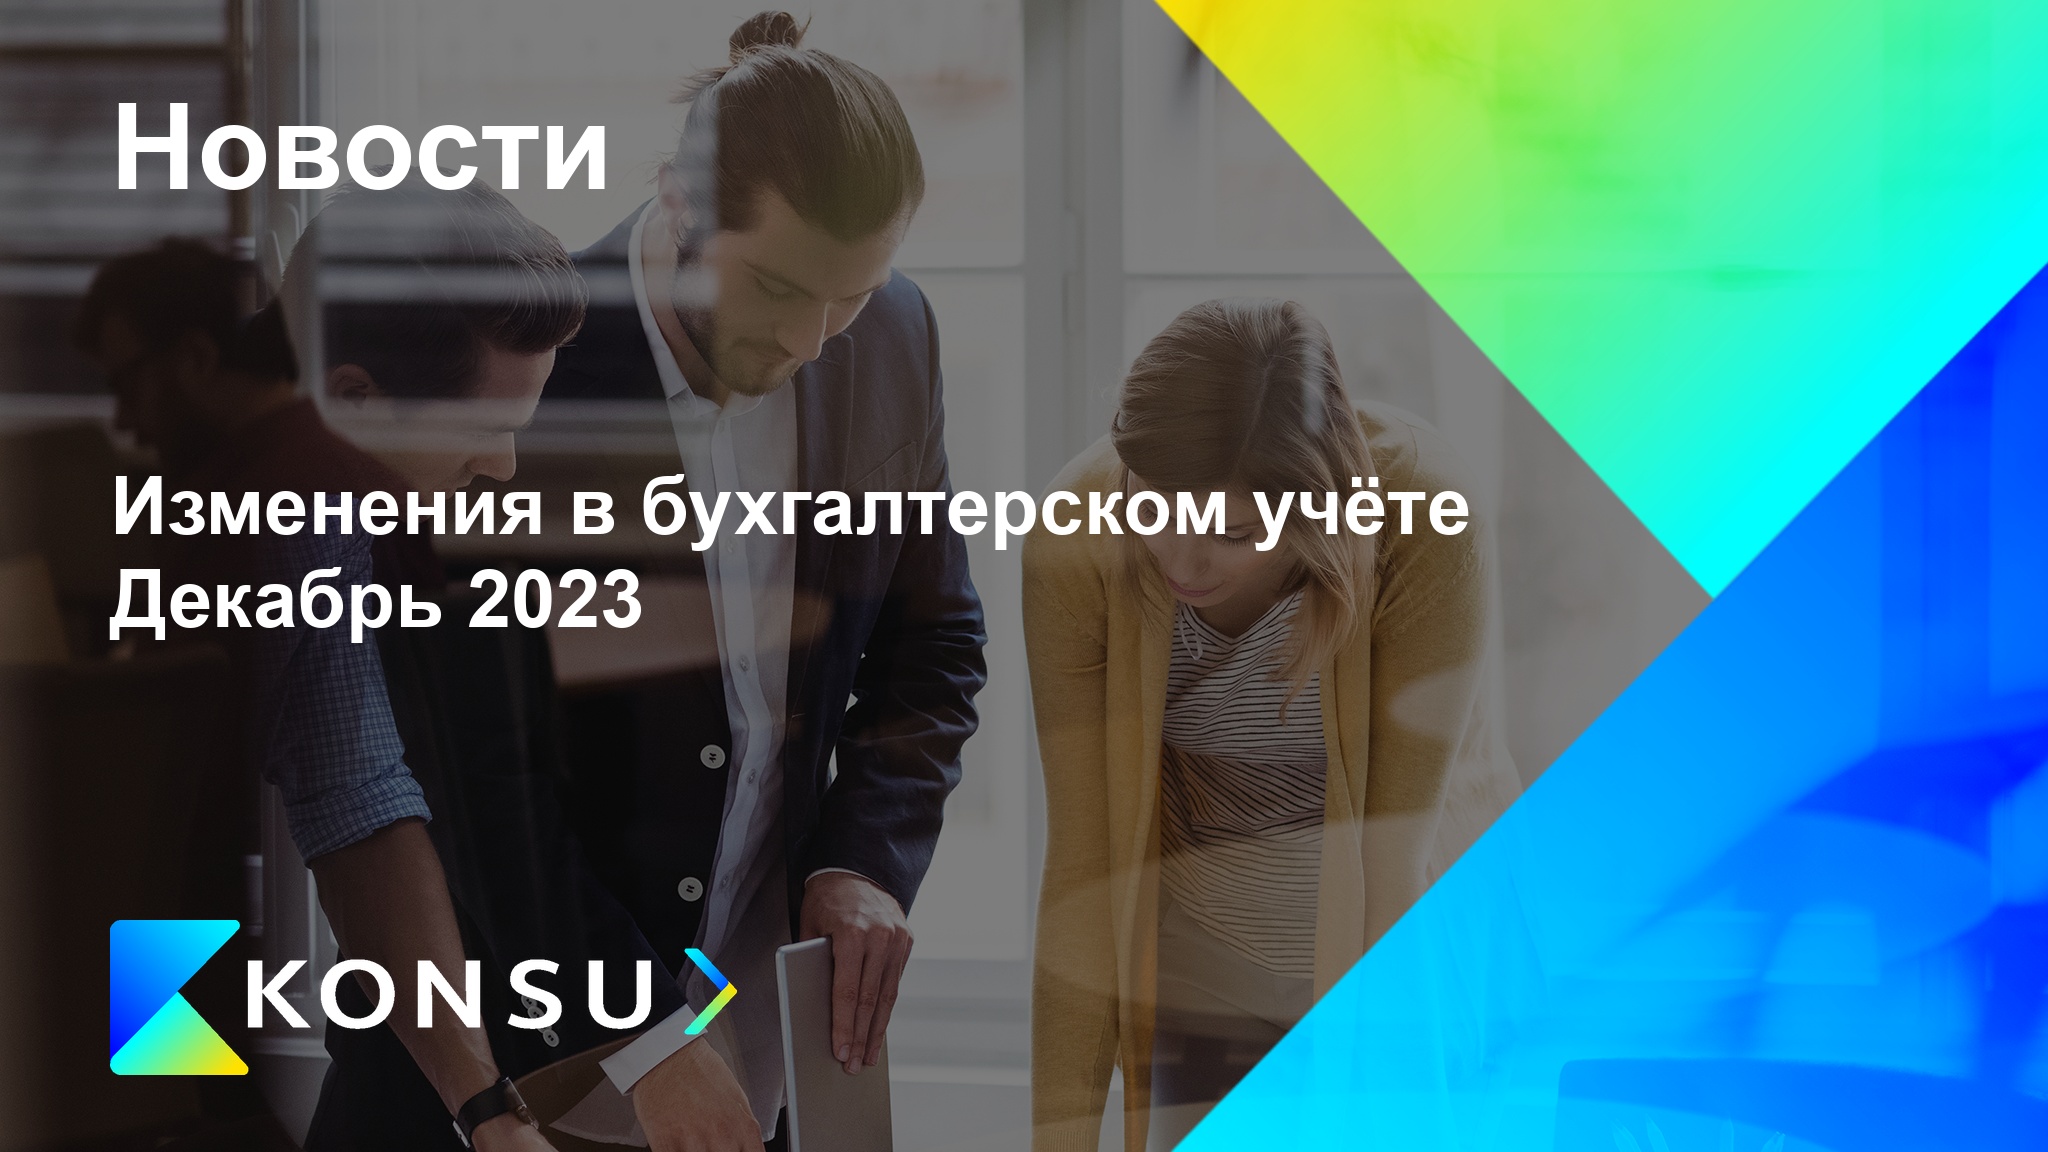 Izmenenija buhgalterskom uchete dekabr 2023 ru konsu outsourcing (2)